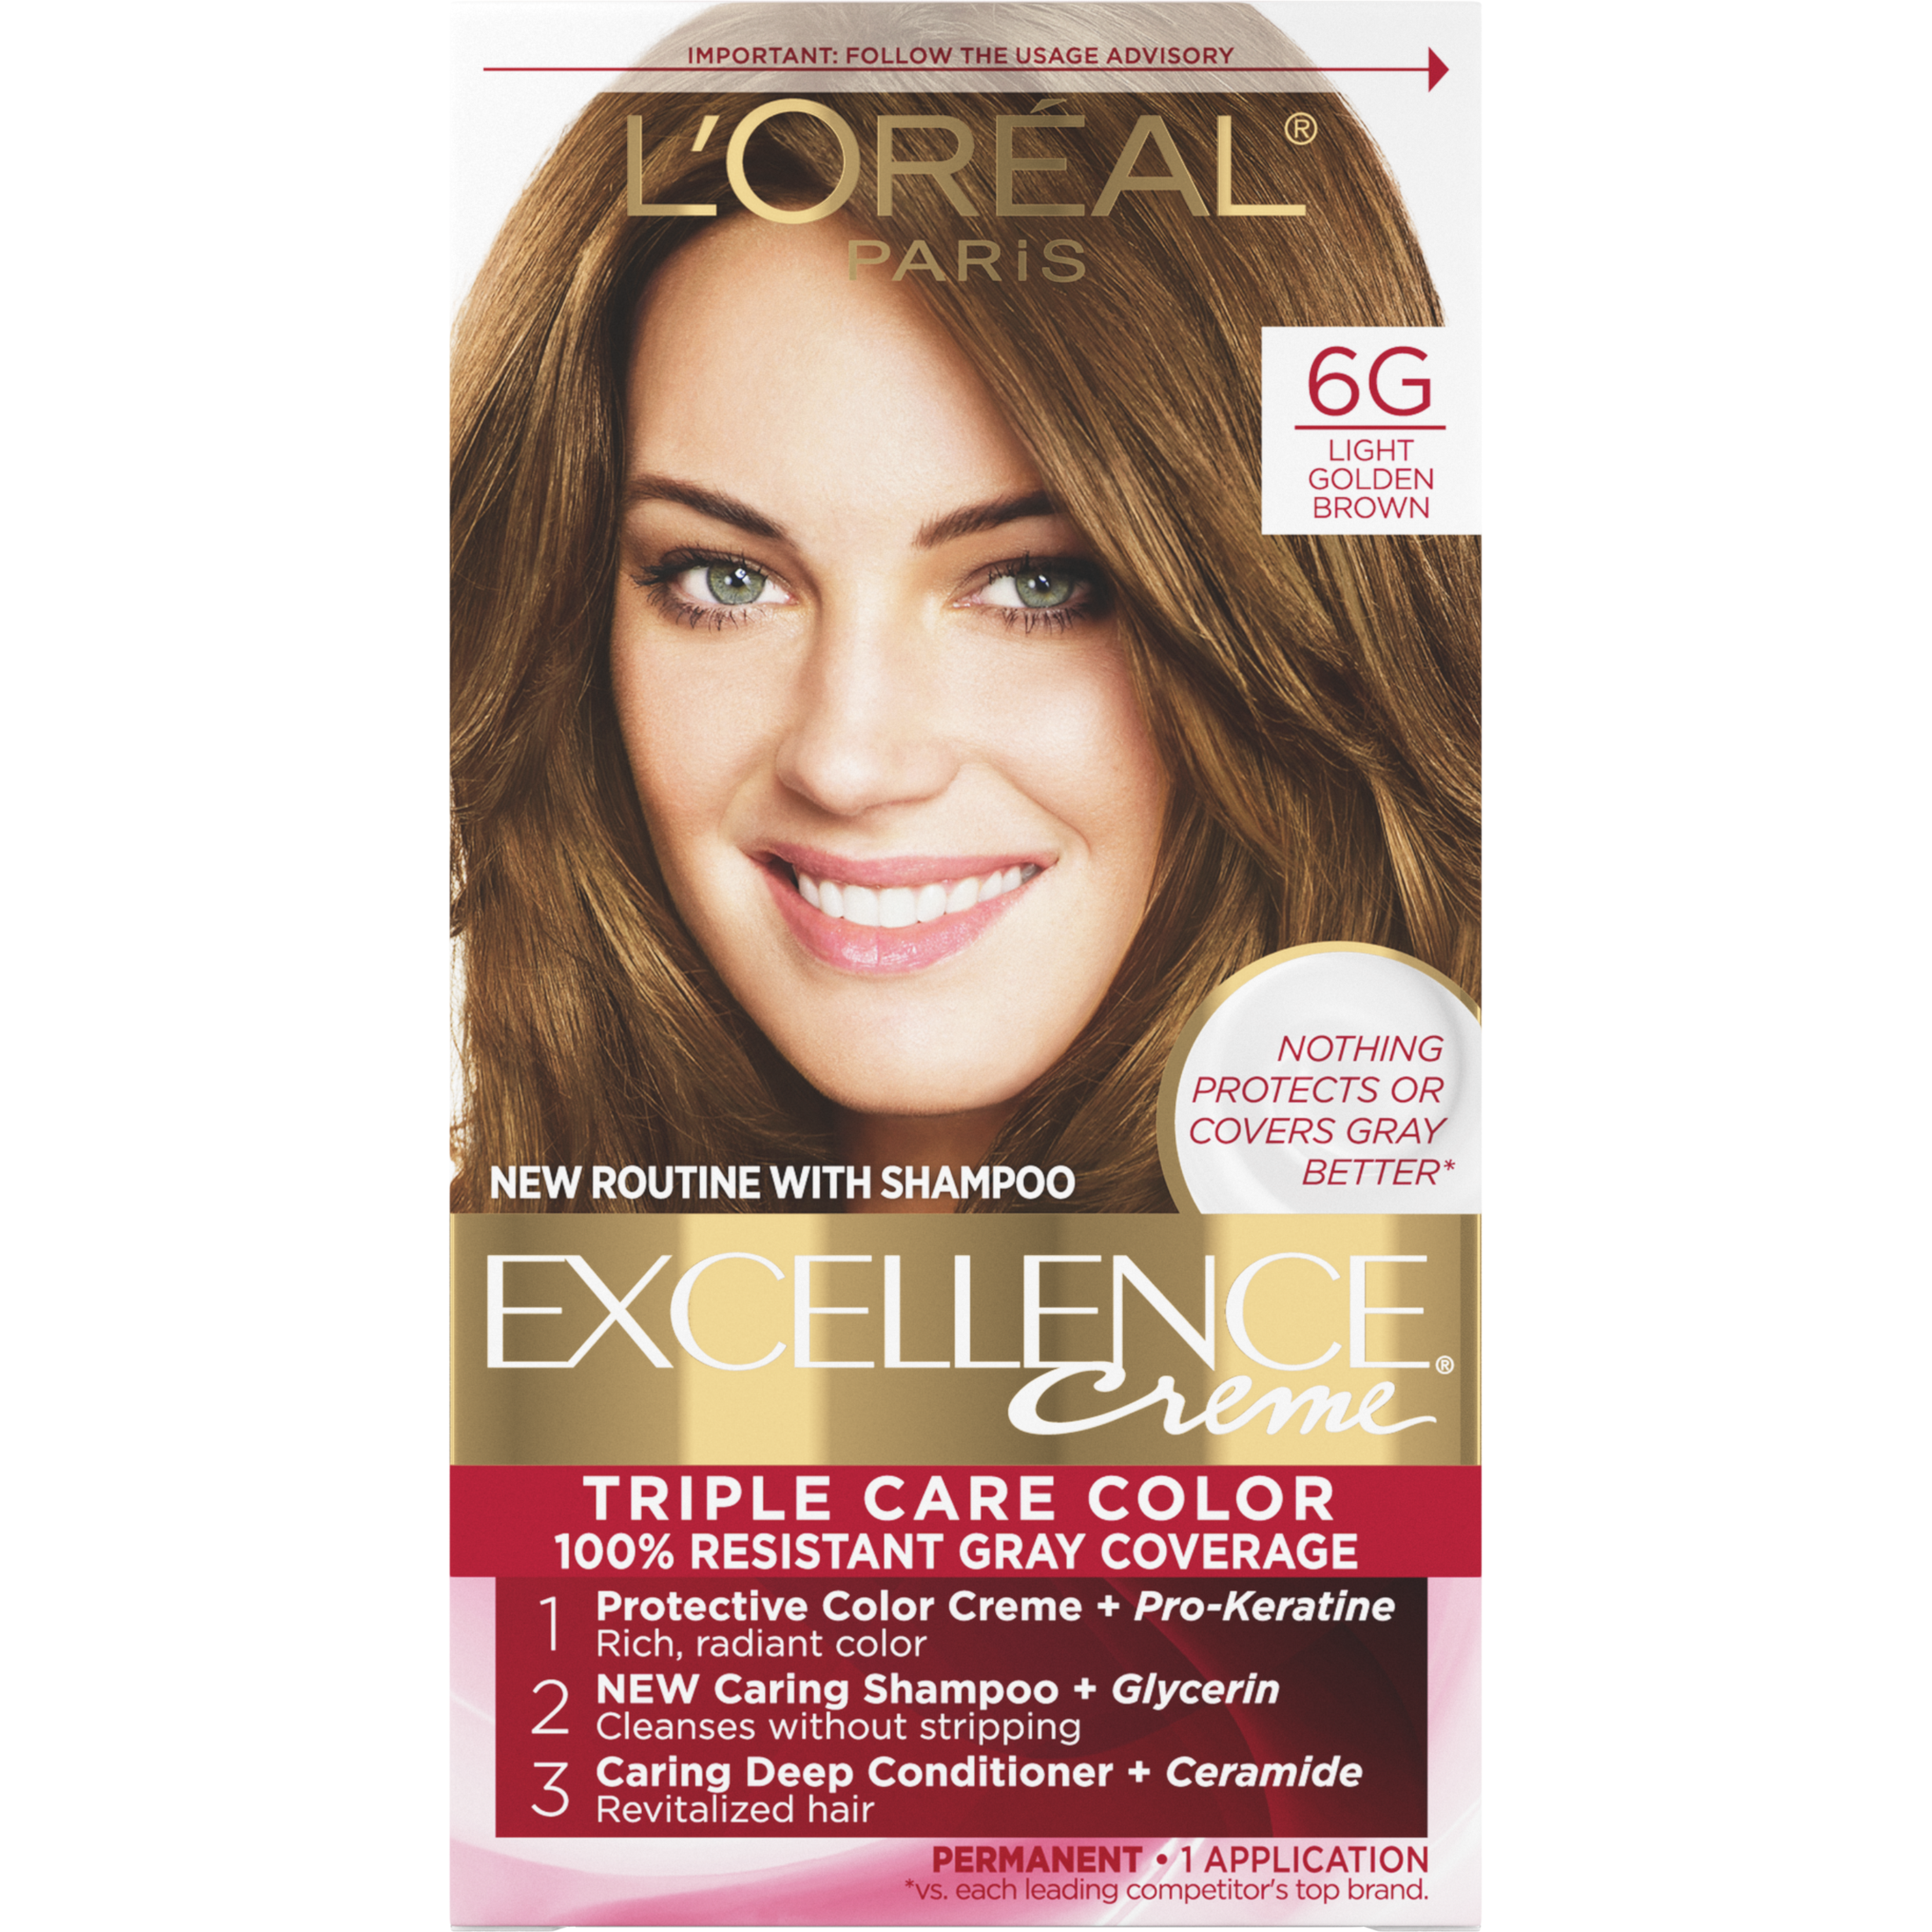 L'Oreal Paris Excellence Creme Permanent Hair Color, 6G Light Golden Brown - image 1 of 8